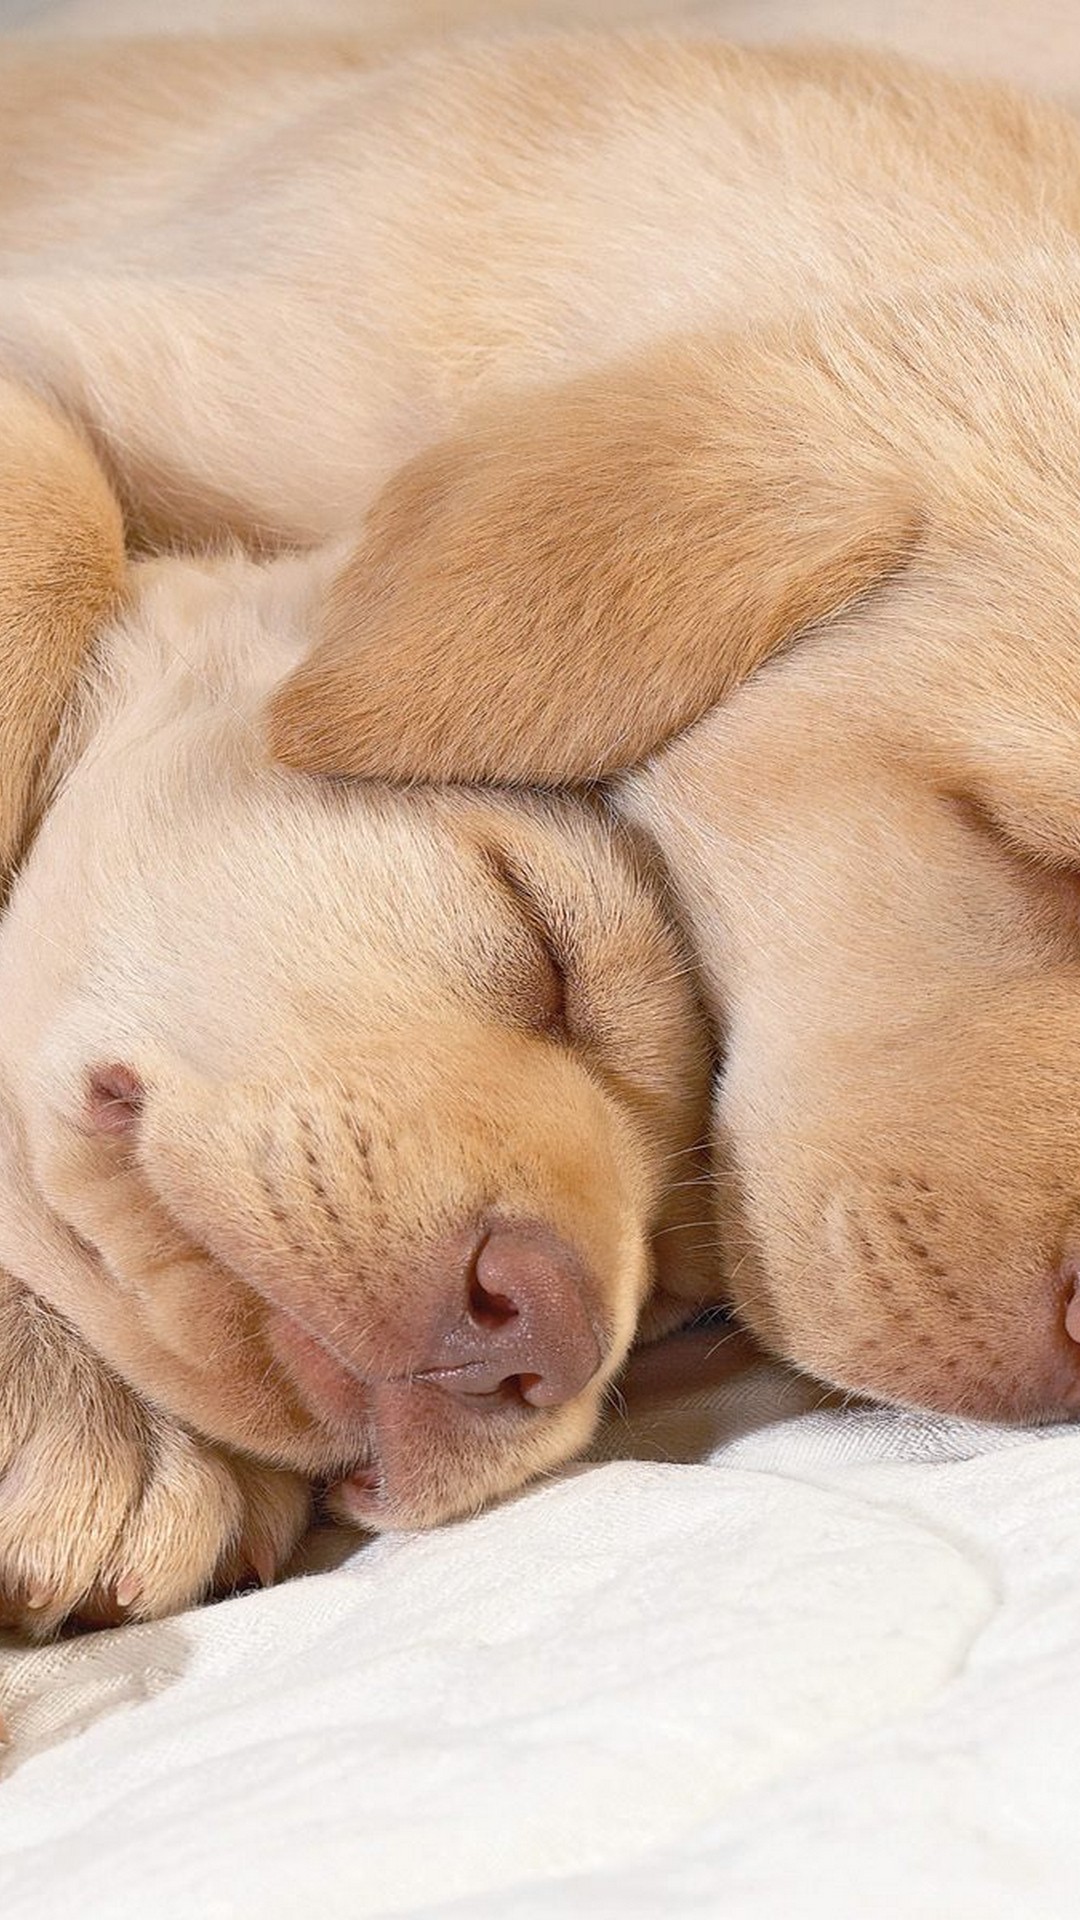 Puppies iPhone Wallpaper resolution 1080x1920